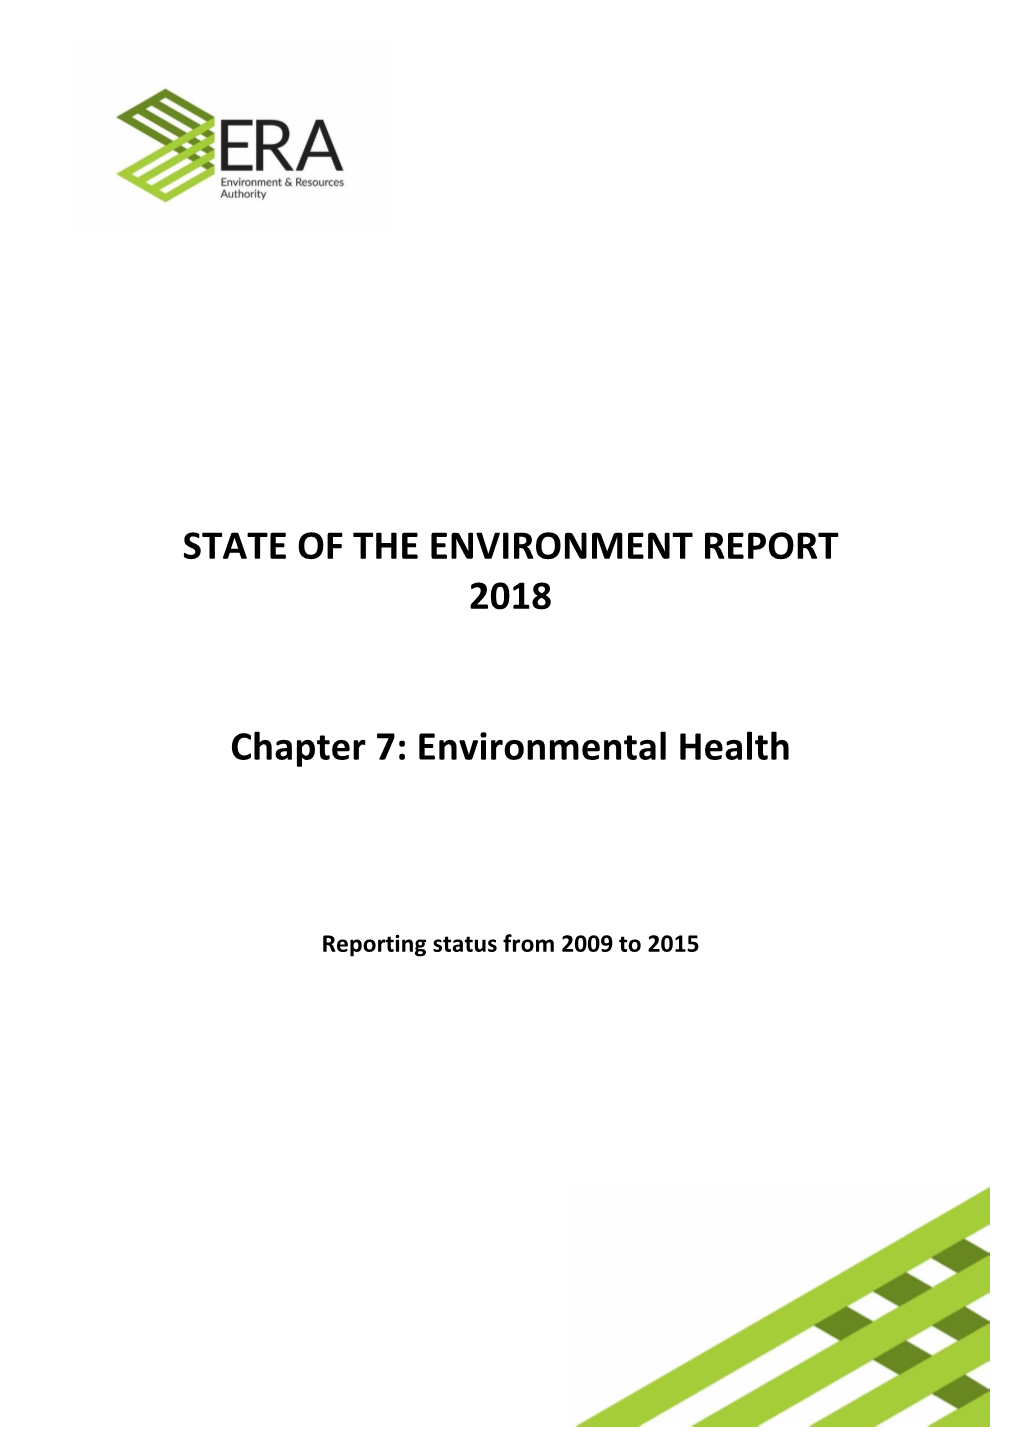 Chapter 7: Environmental Health